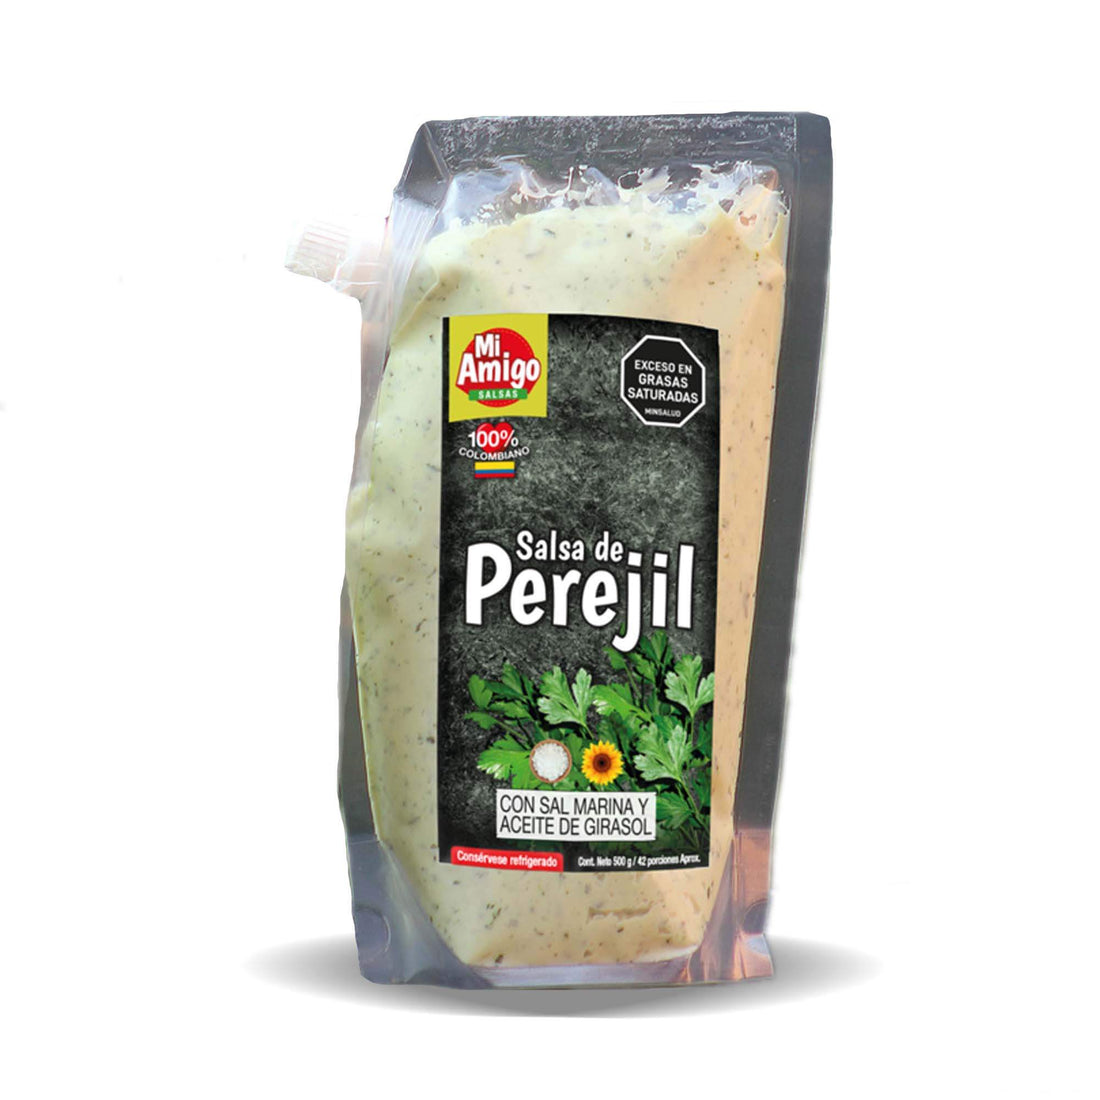 Salsa de Perejil x 240gr: Fotografía de salsa de perejil en envase de 240 gramos.